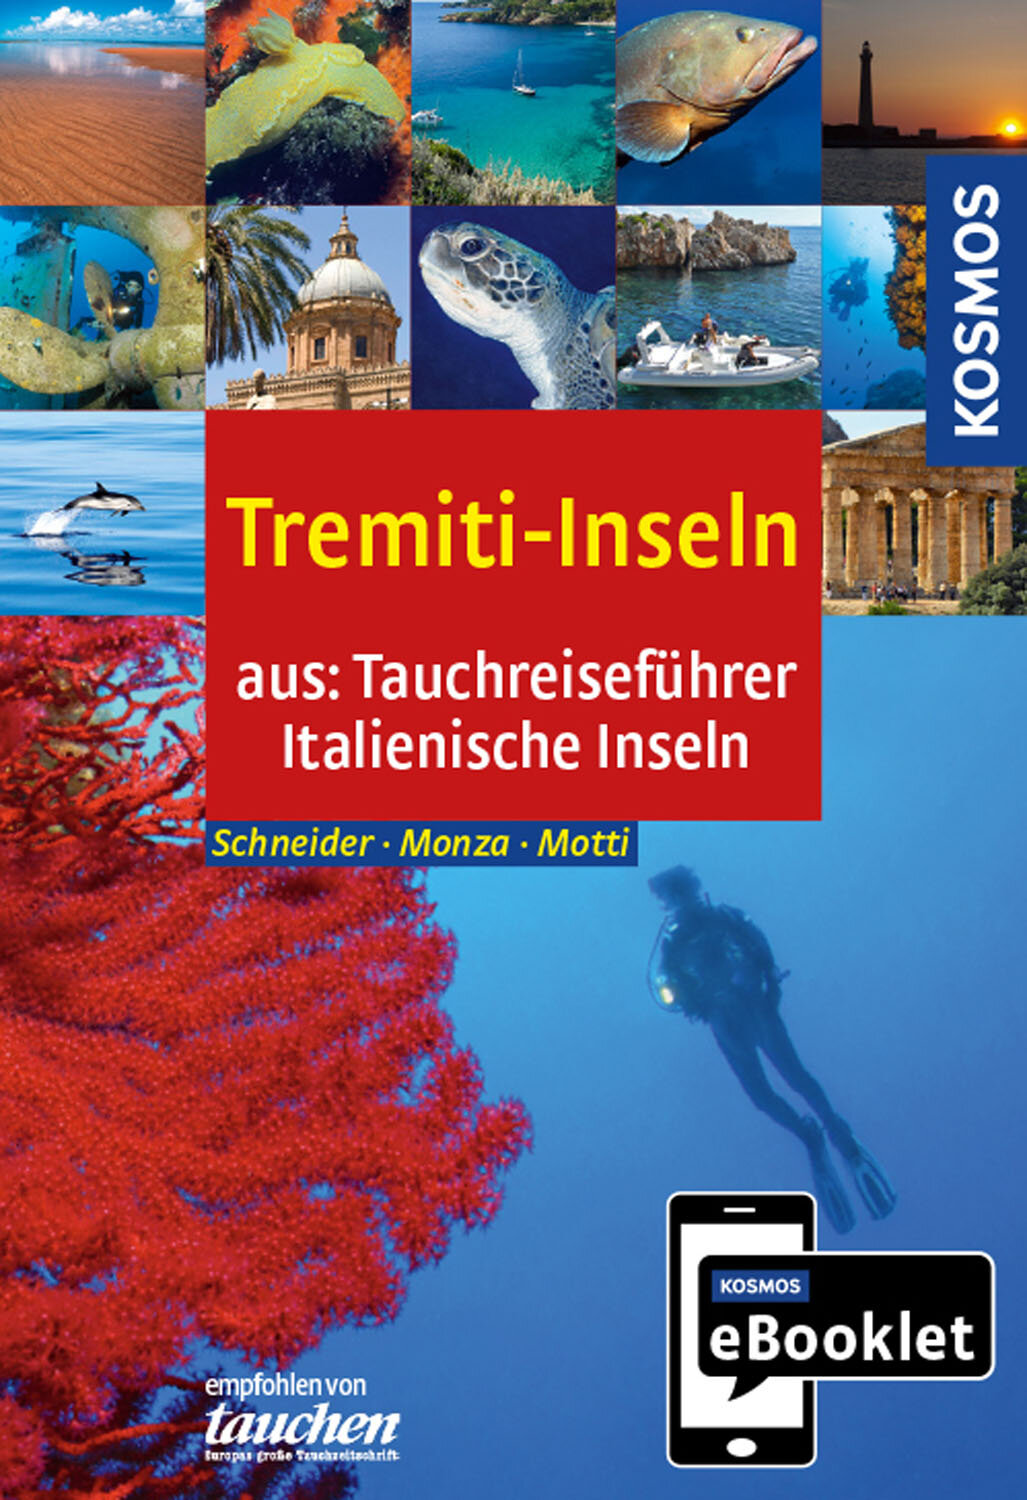 KOSMOS eBooklet: Tauchreiseführer Tremiti Inseln